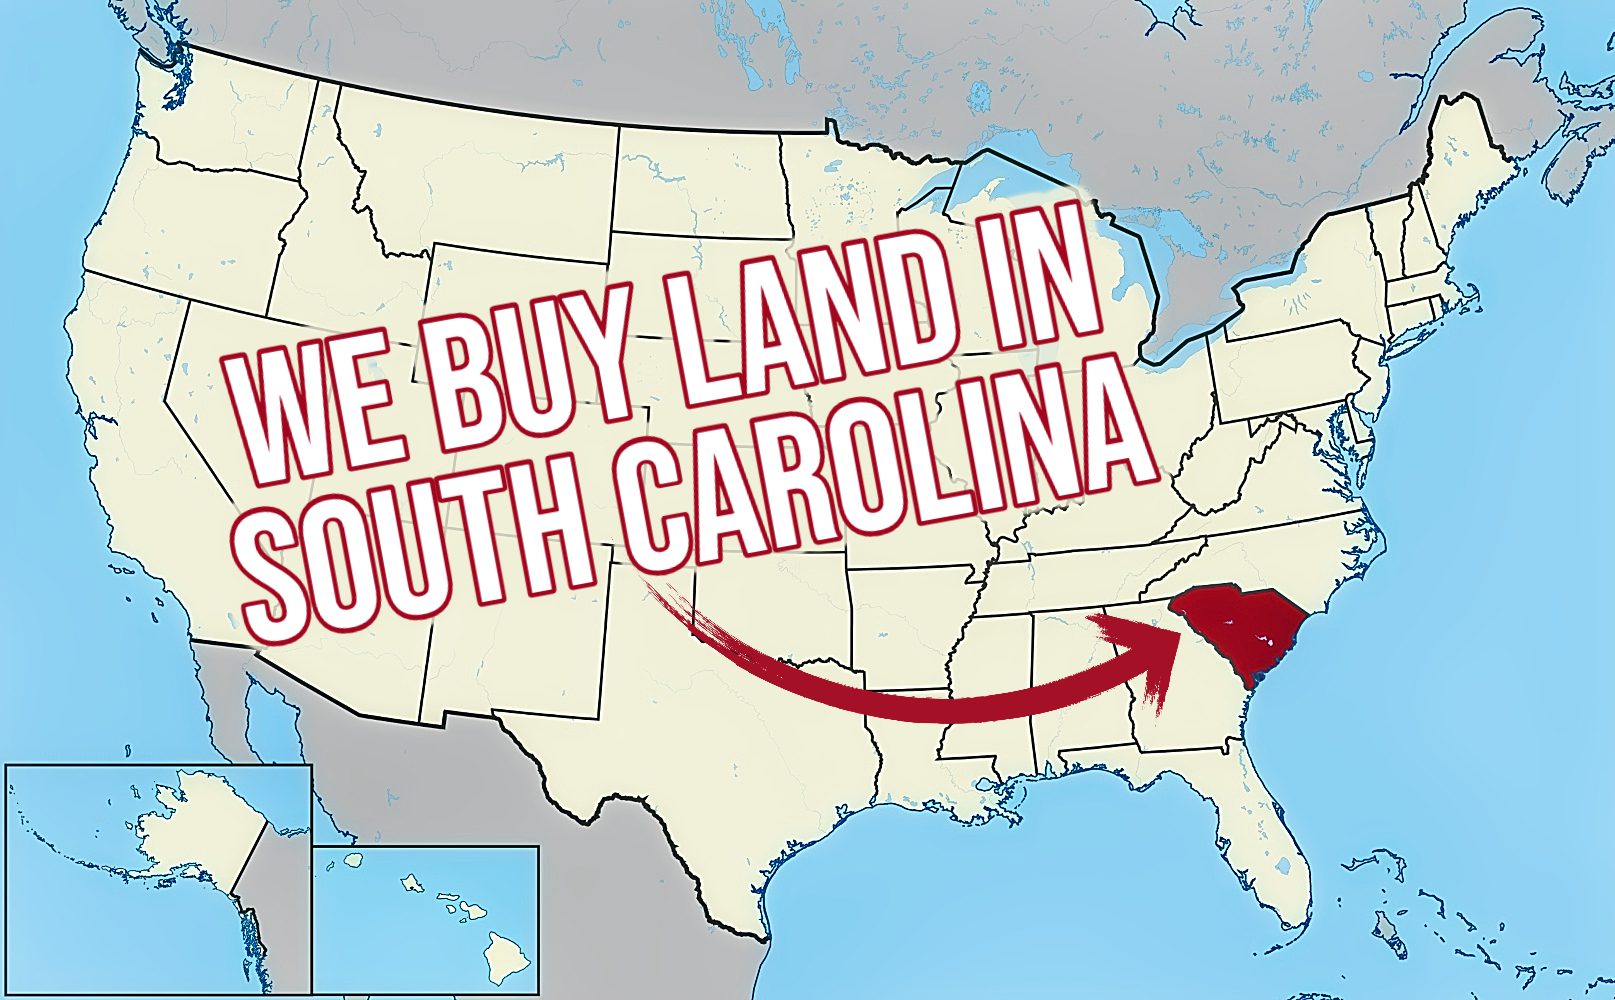 Land Buying Company South Carolina